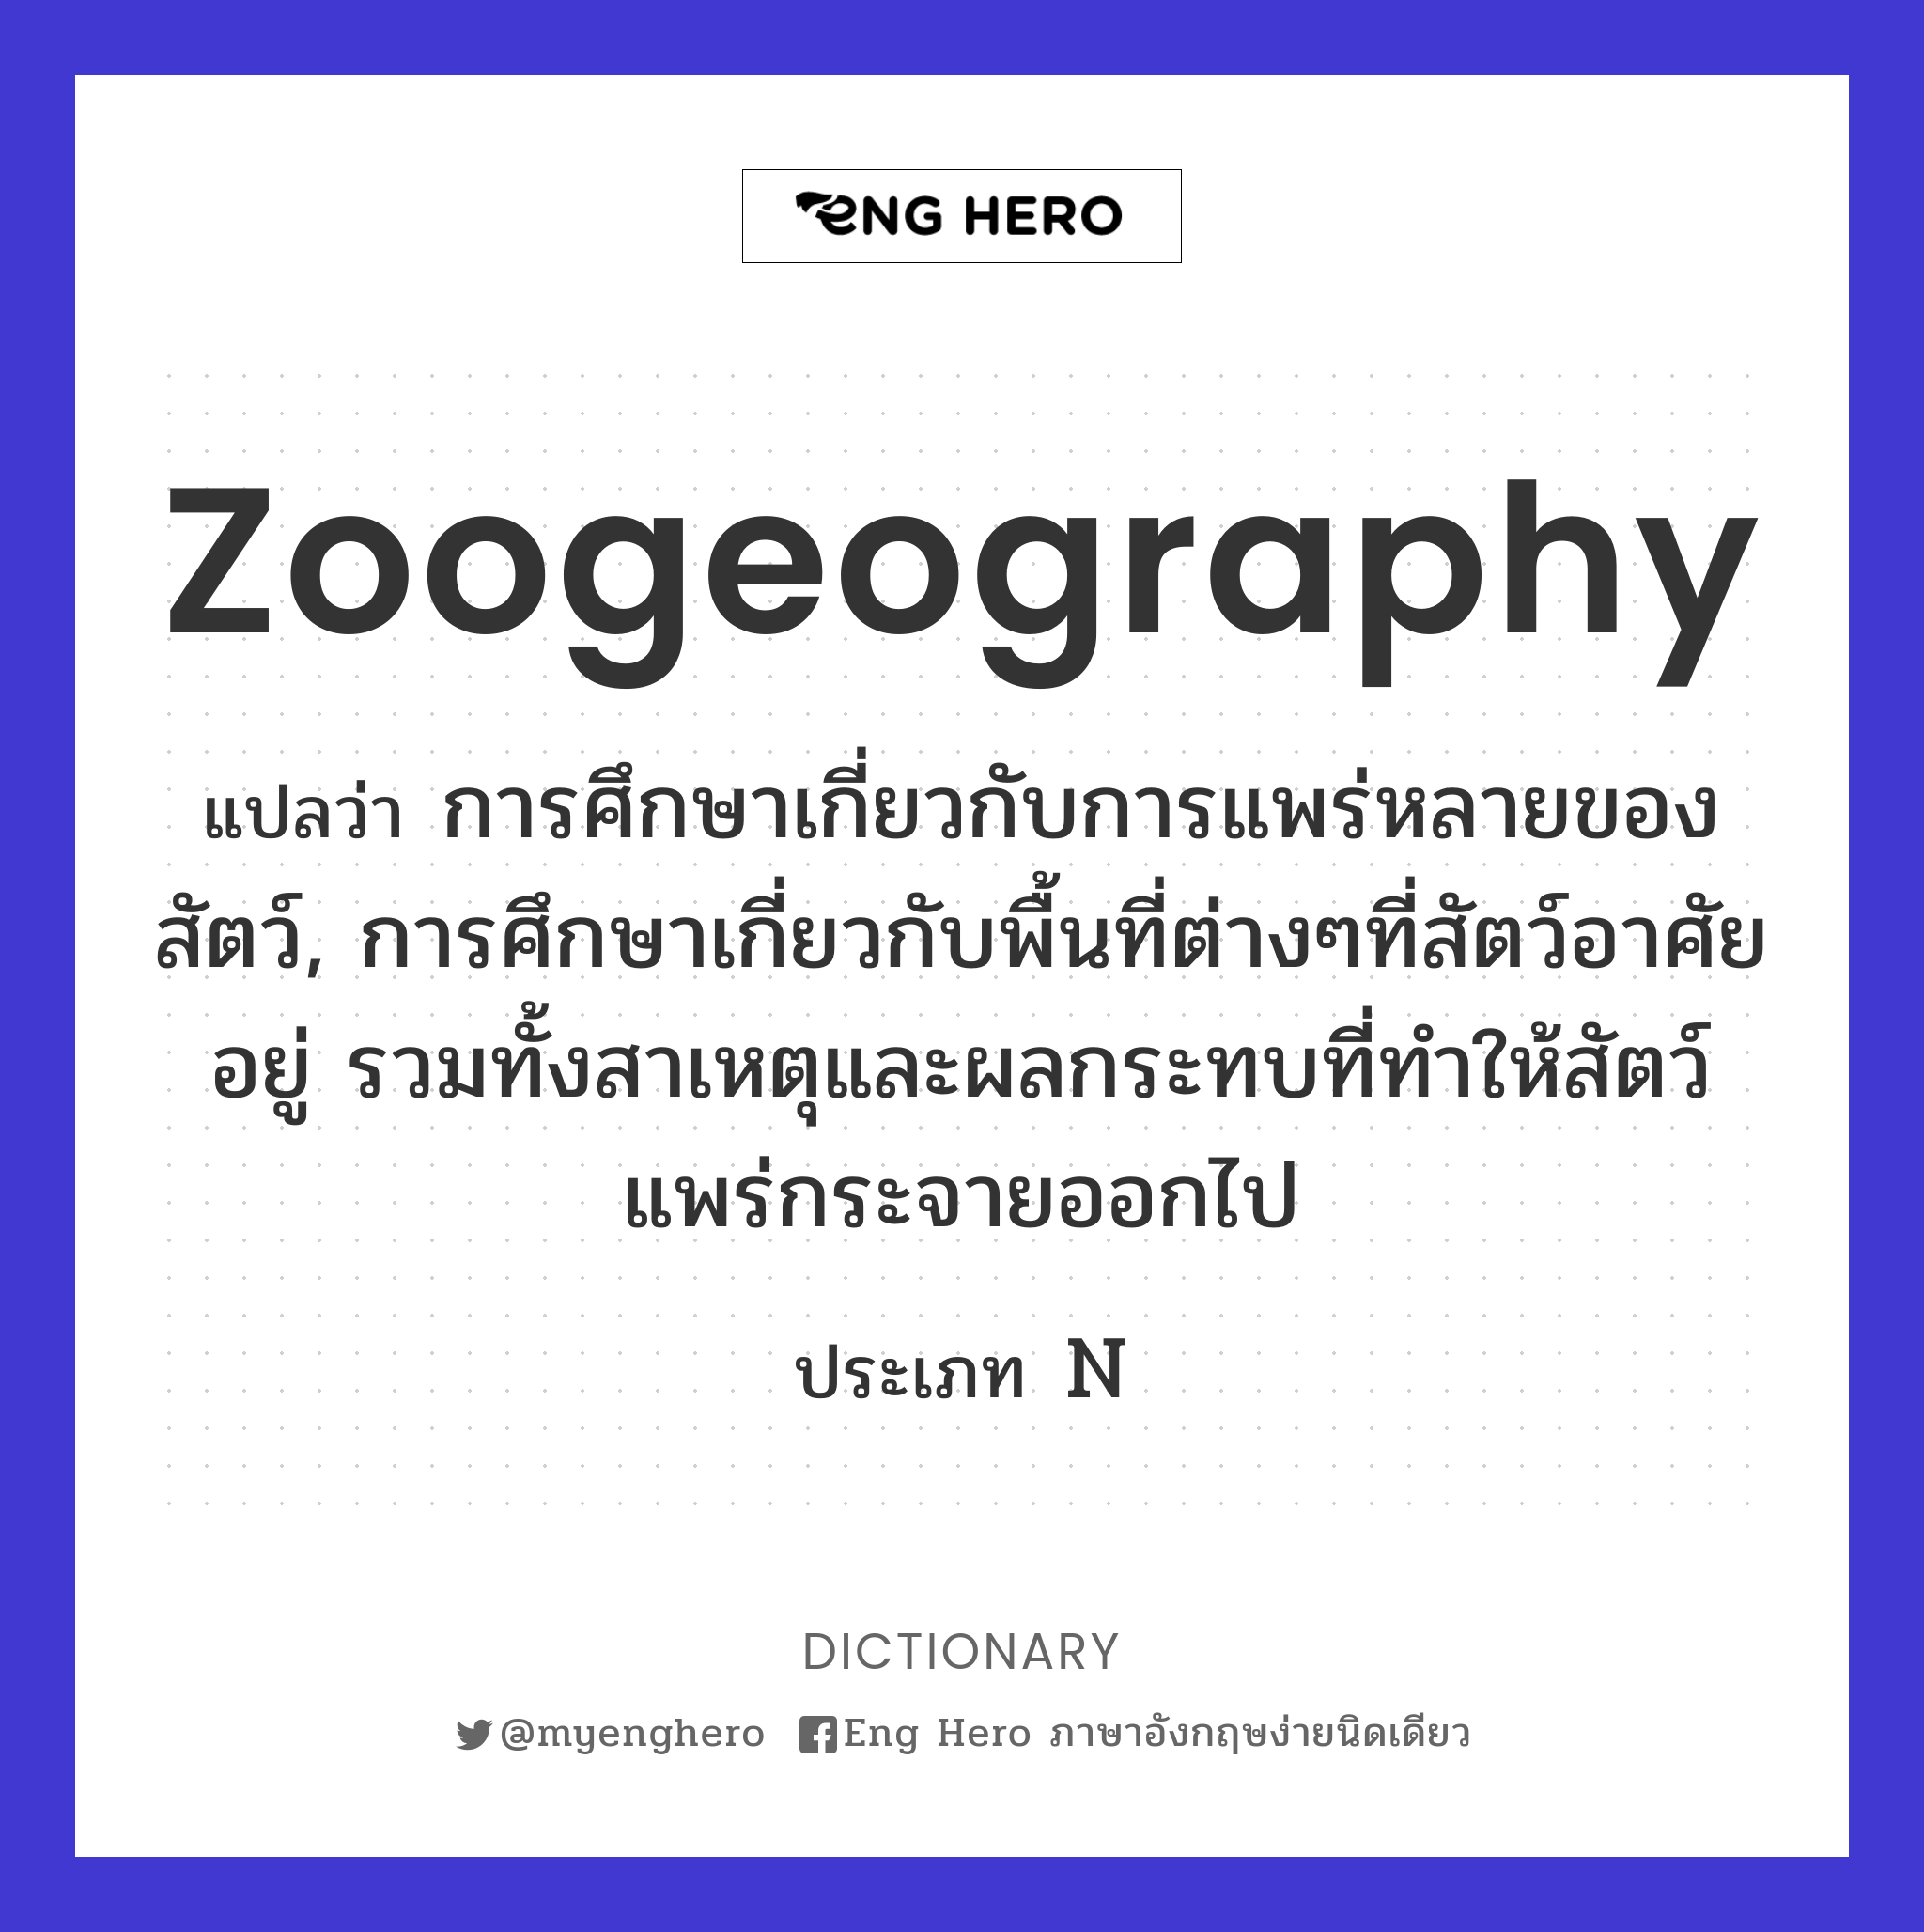 zoogeography